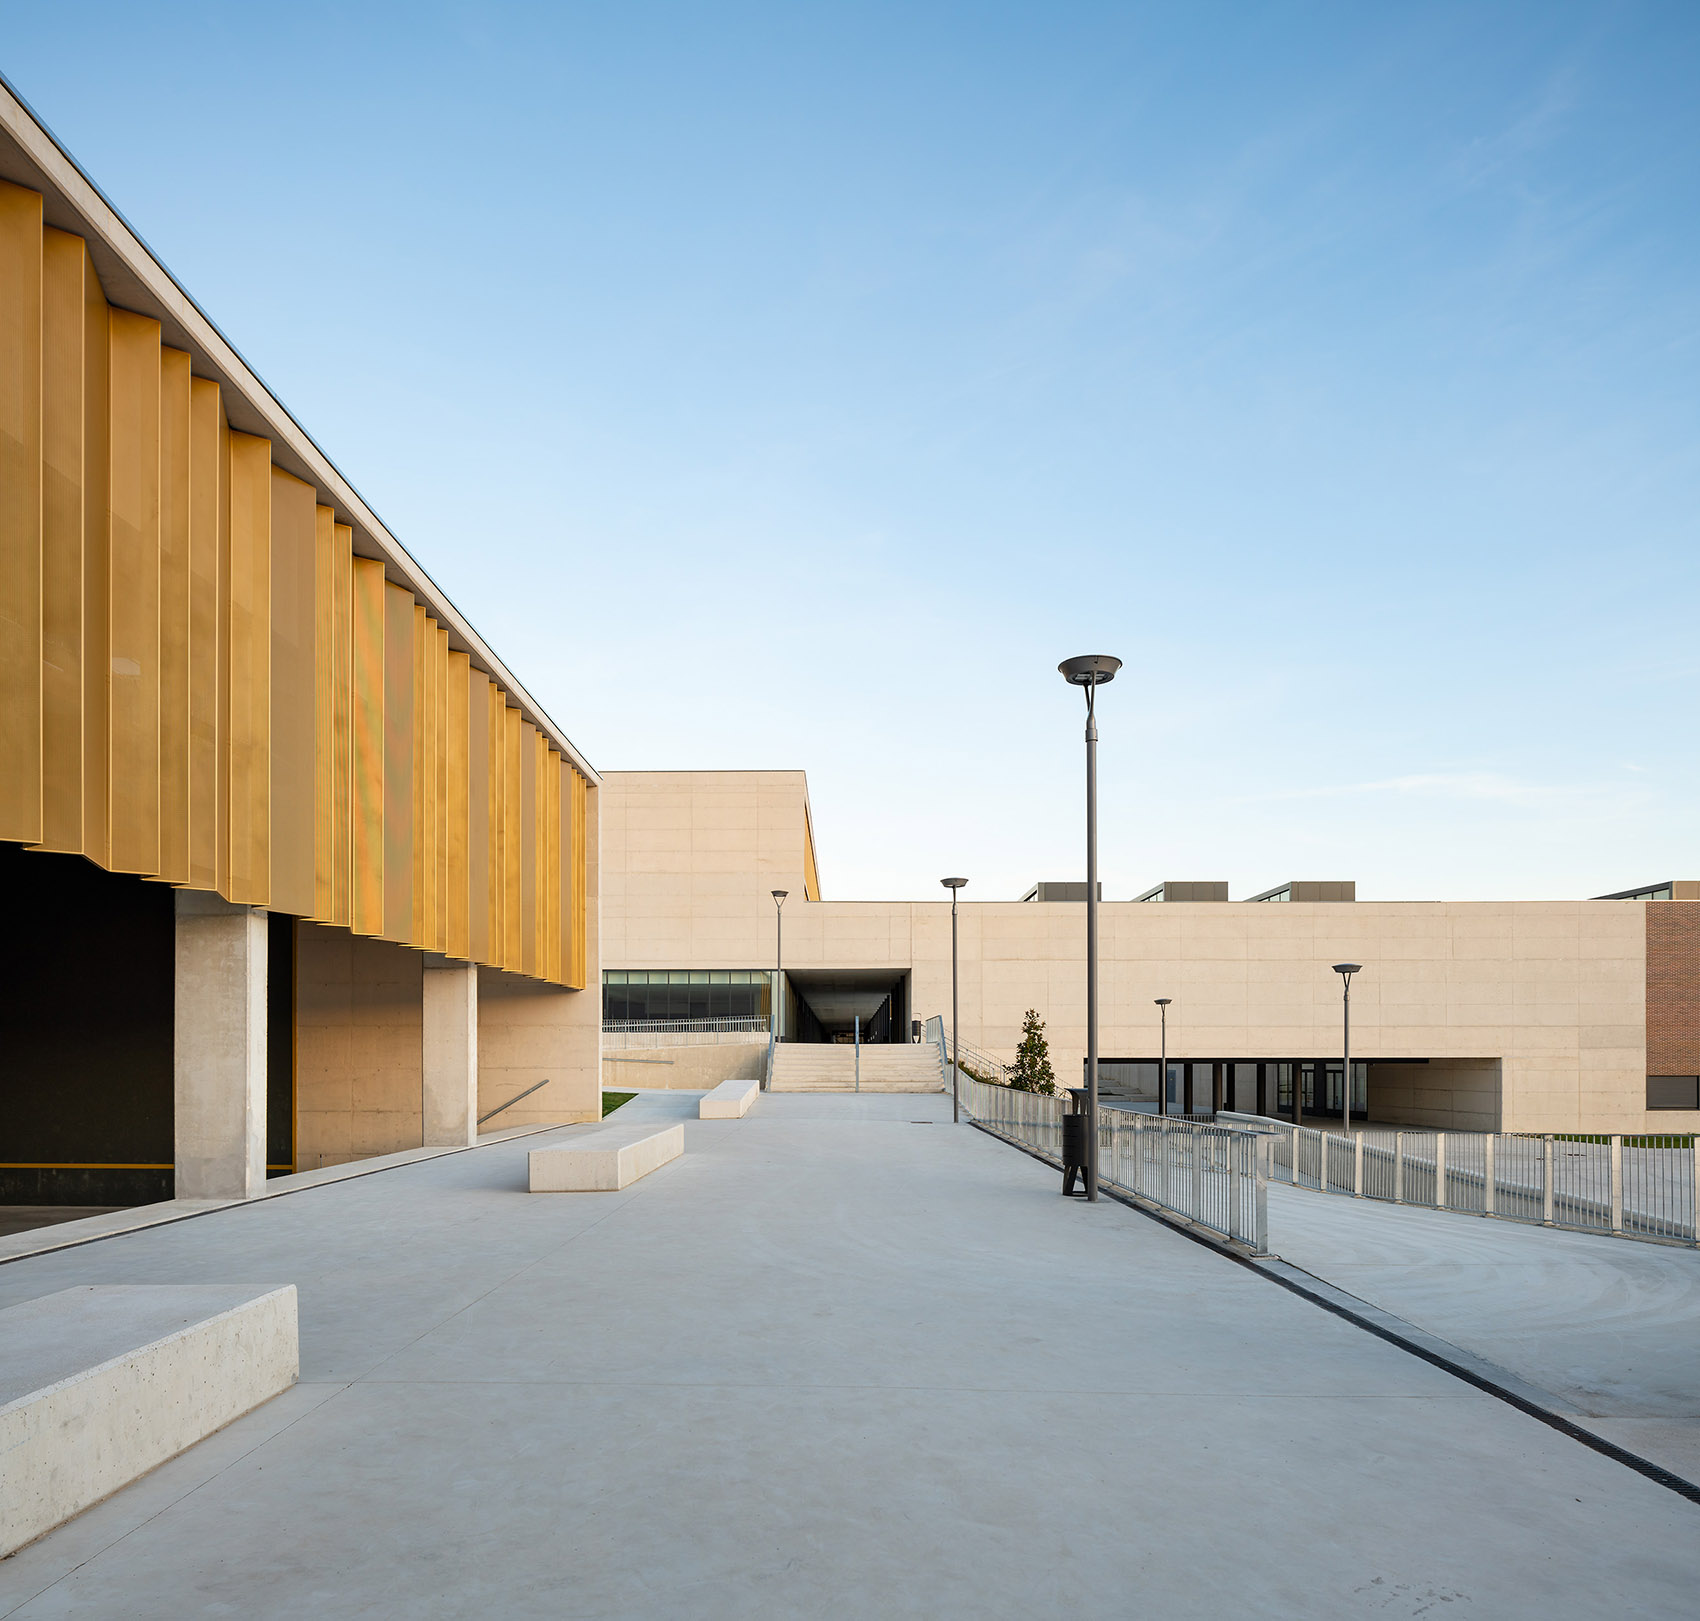 Salesianos Pamplona工艺学校，西班牙/体块与空地交错形成丰富空间体验-67